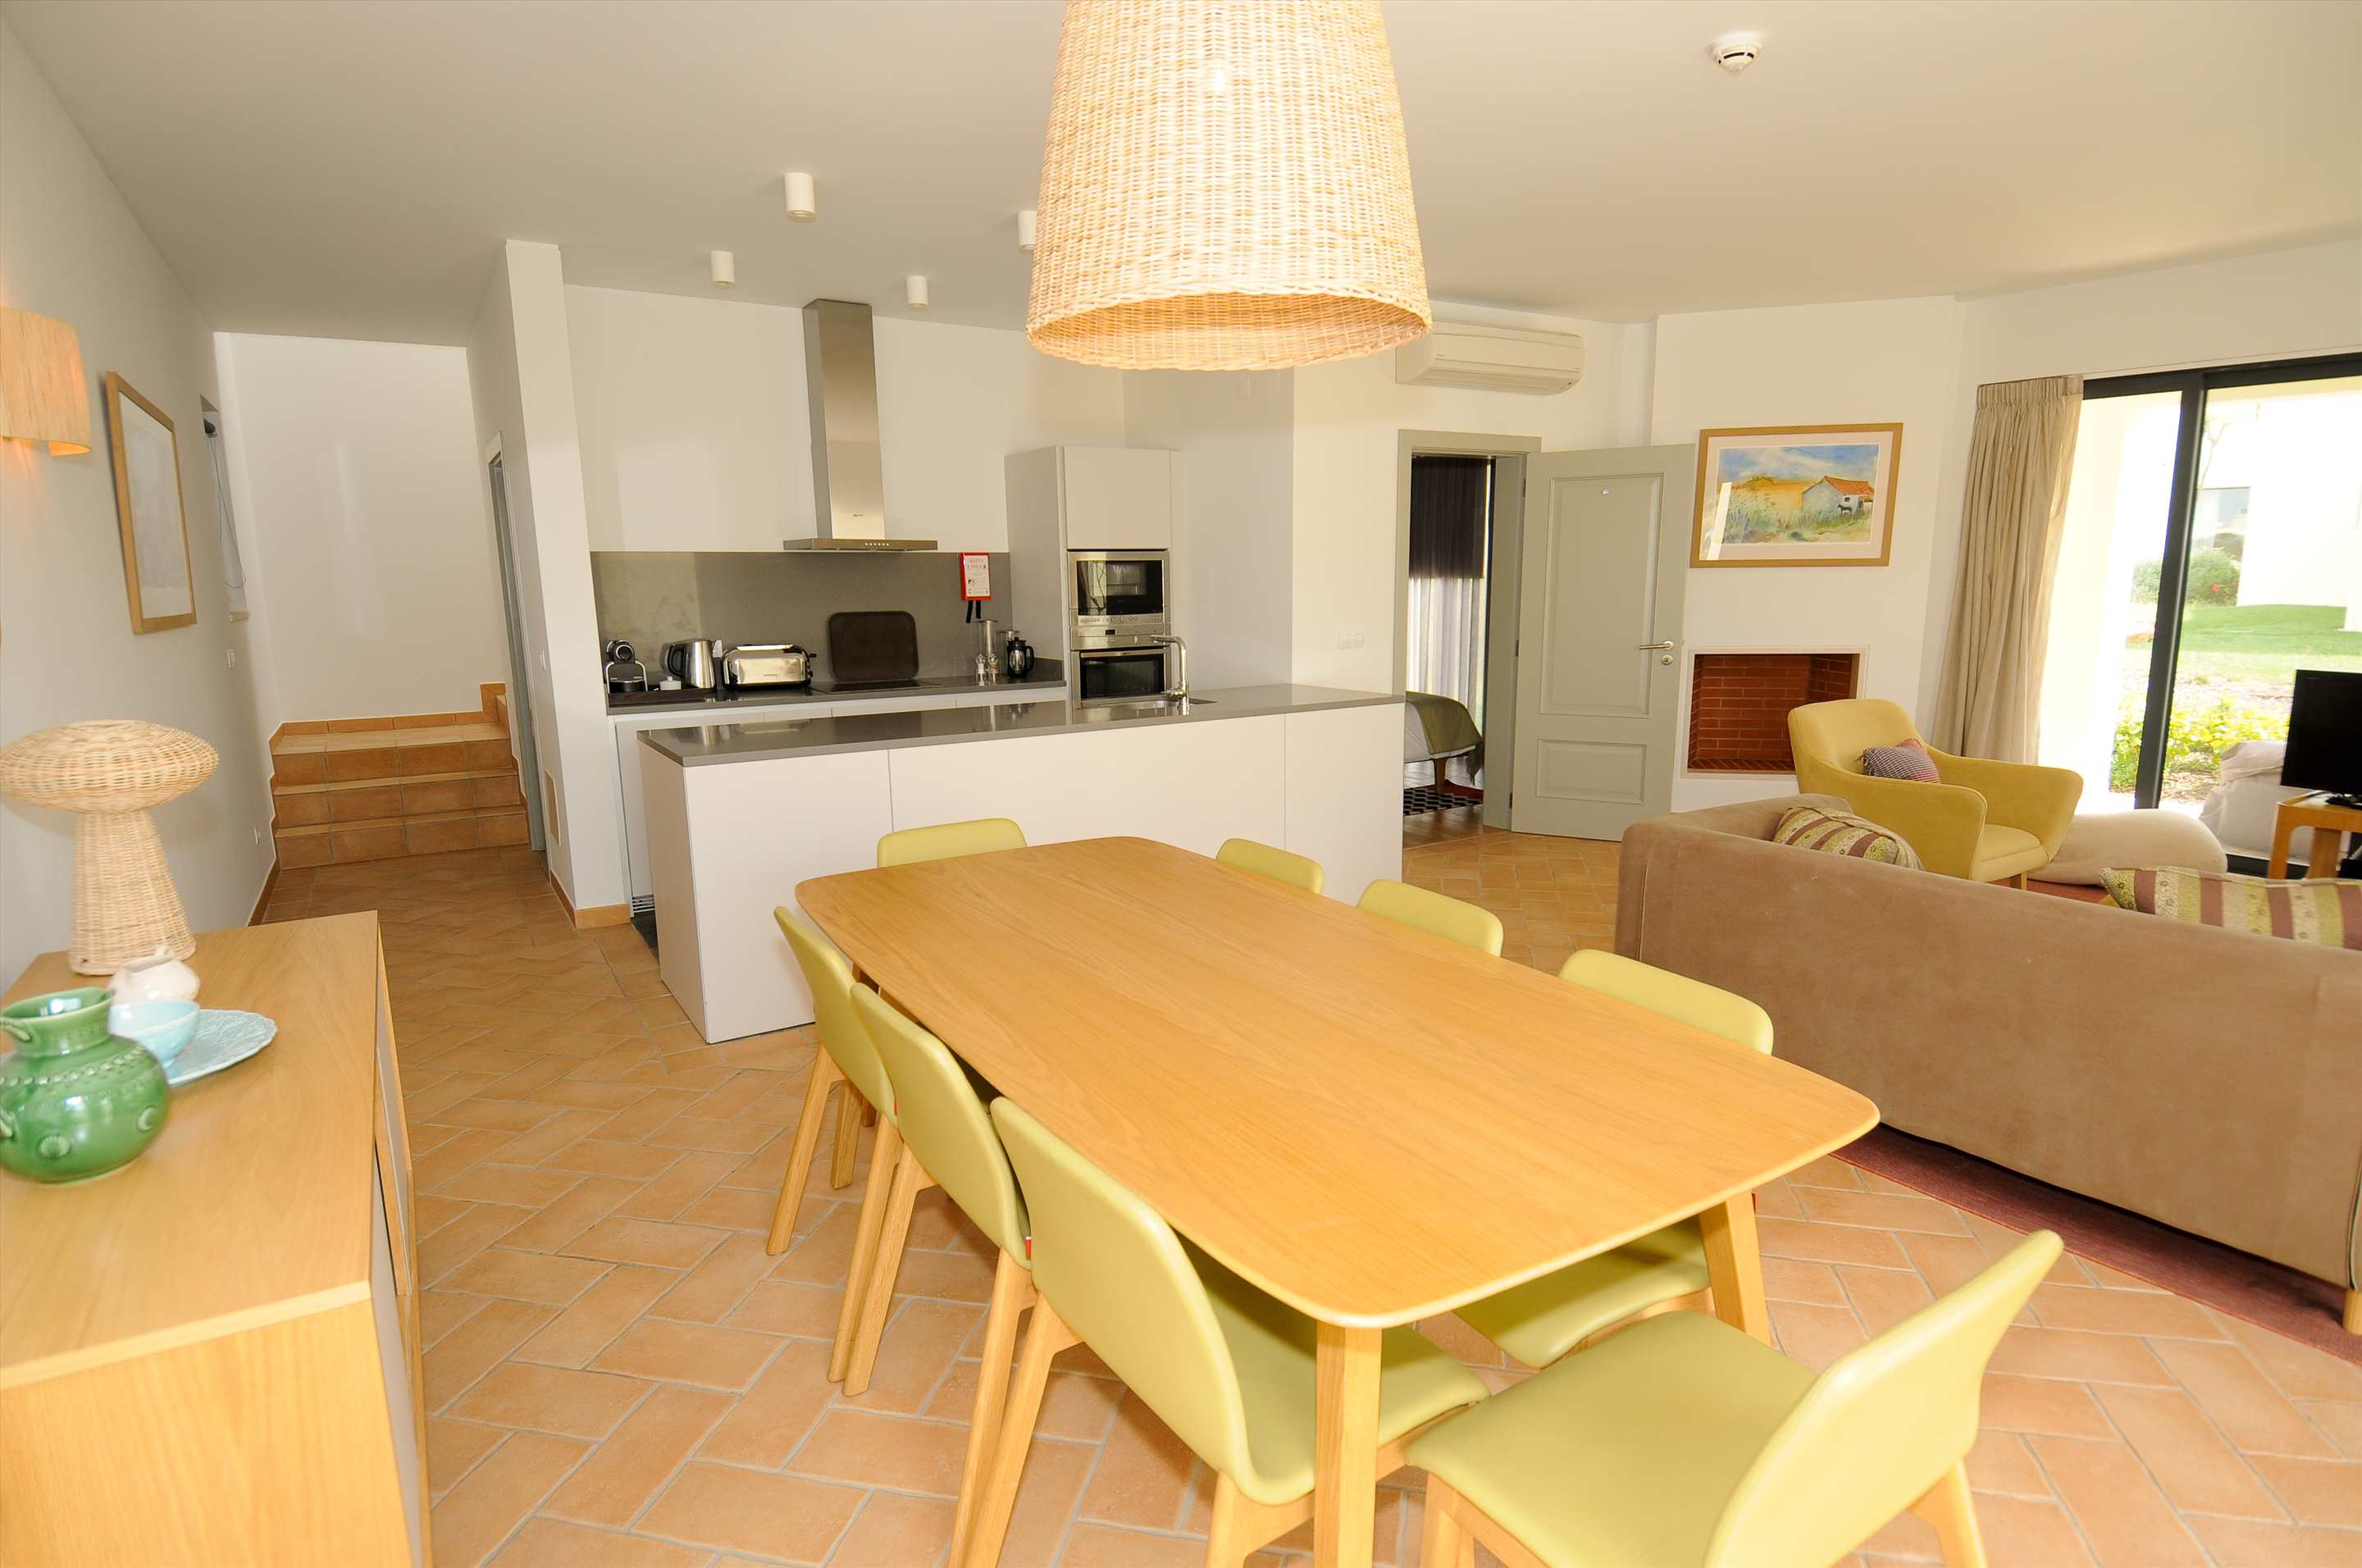 Martinhal Village Garden House, One Bedroom Apartment, 1 bedroom villa in Martinhal Sagres, Algarve Photo #3